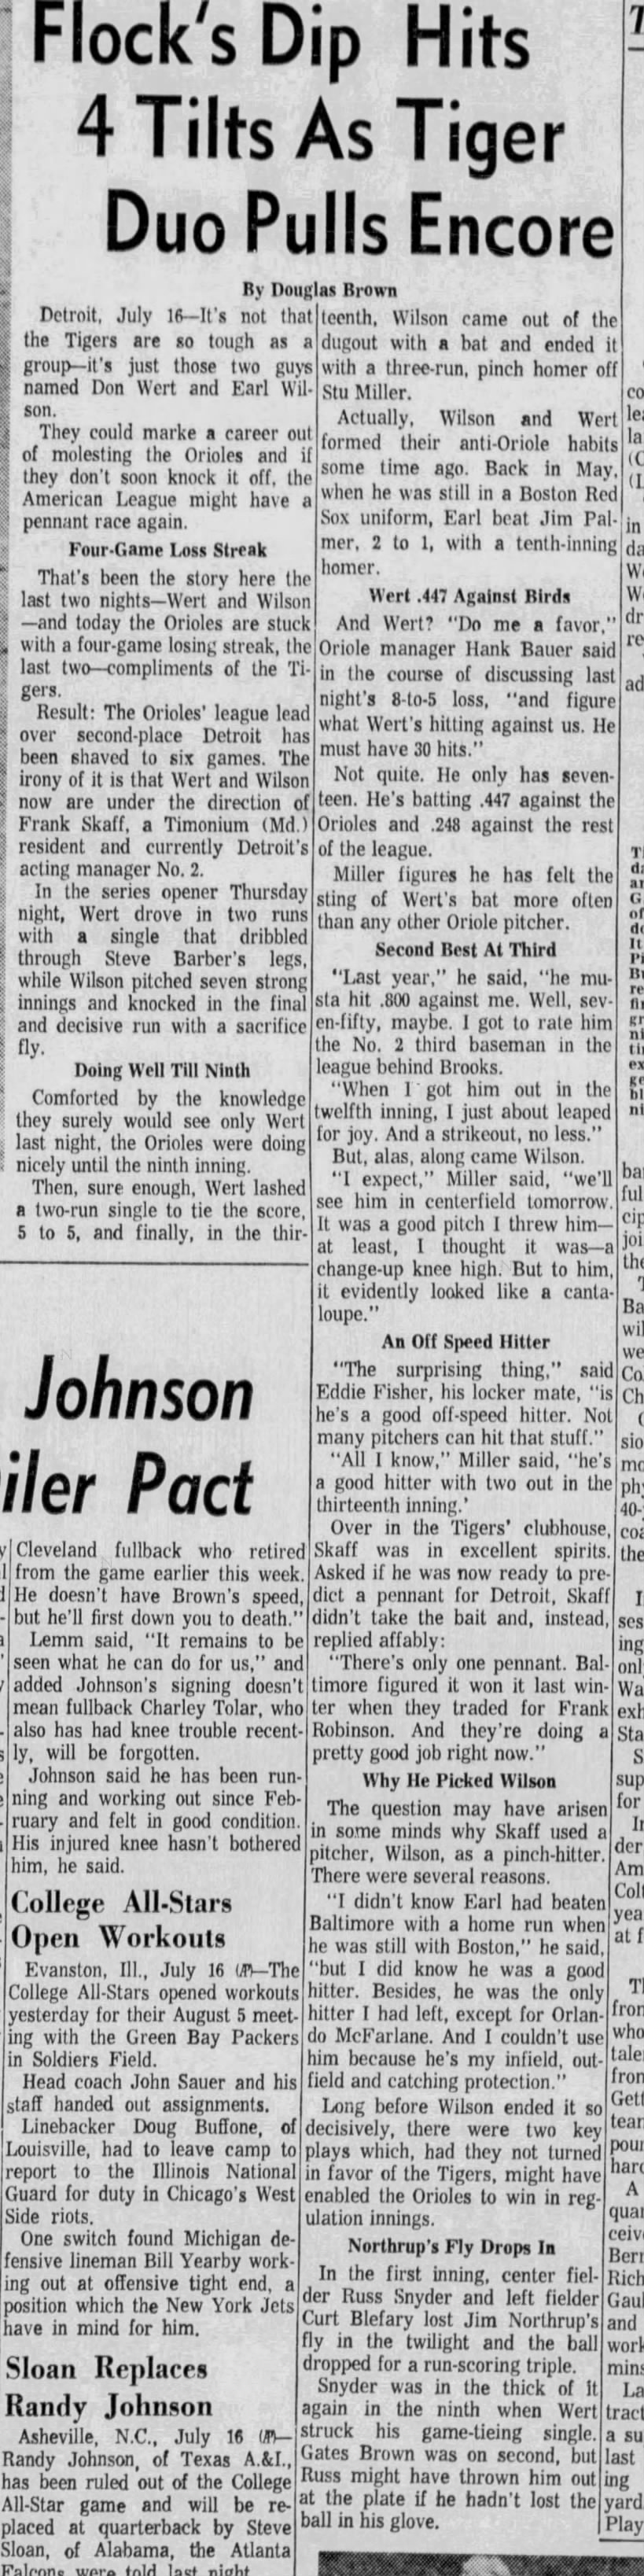 Sat 7/16/1966: Earl Wilson PH Walk-Off HR